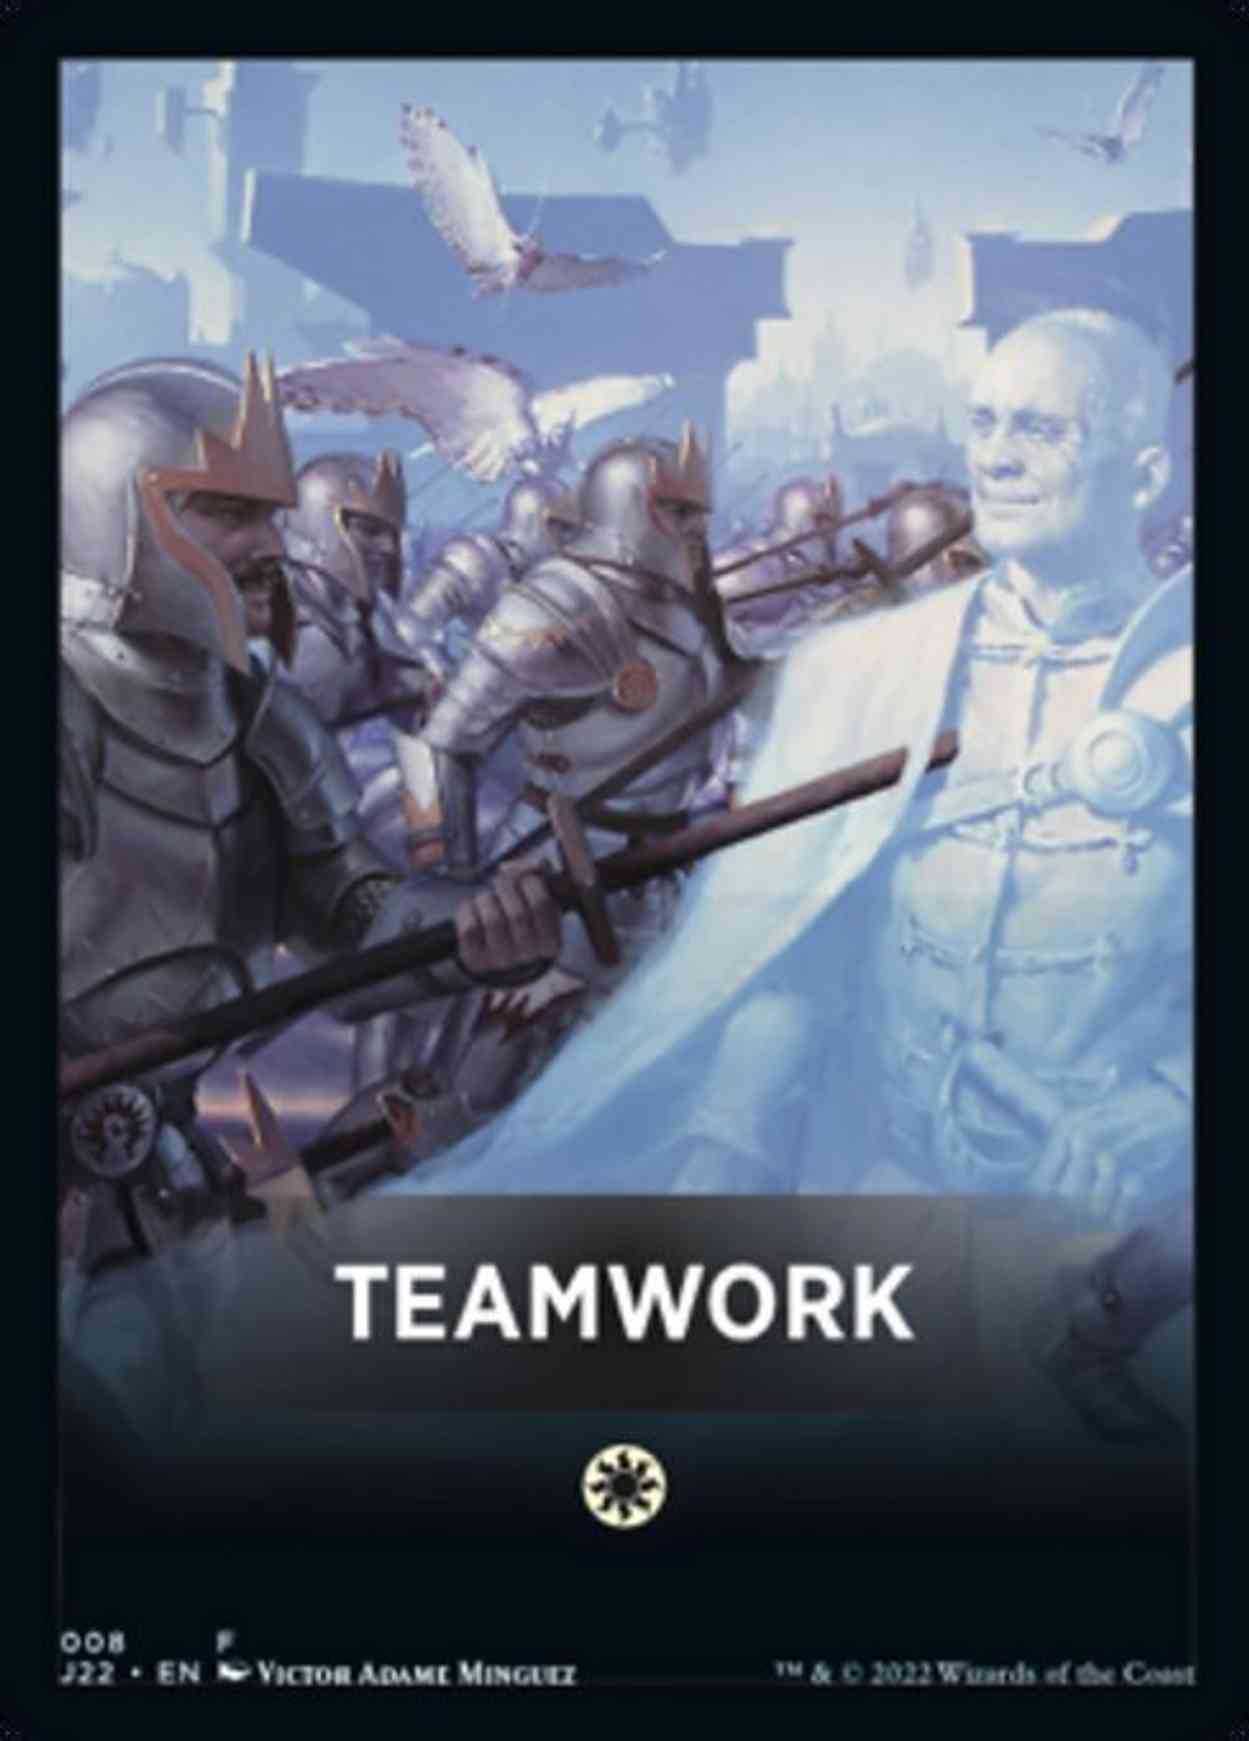 Teamwork Theme Card magic card front